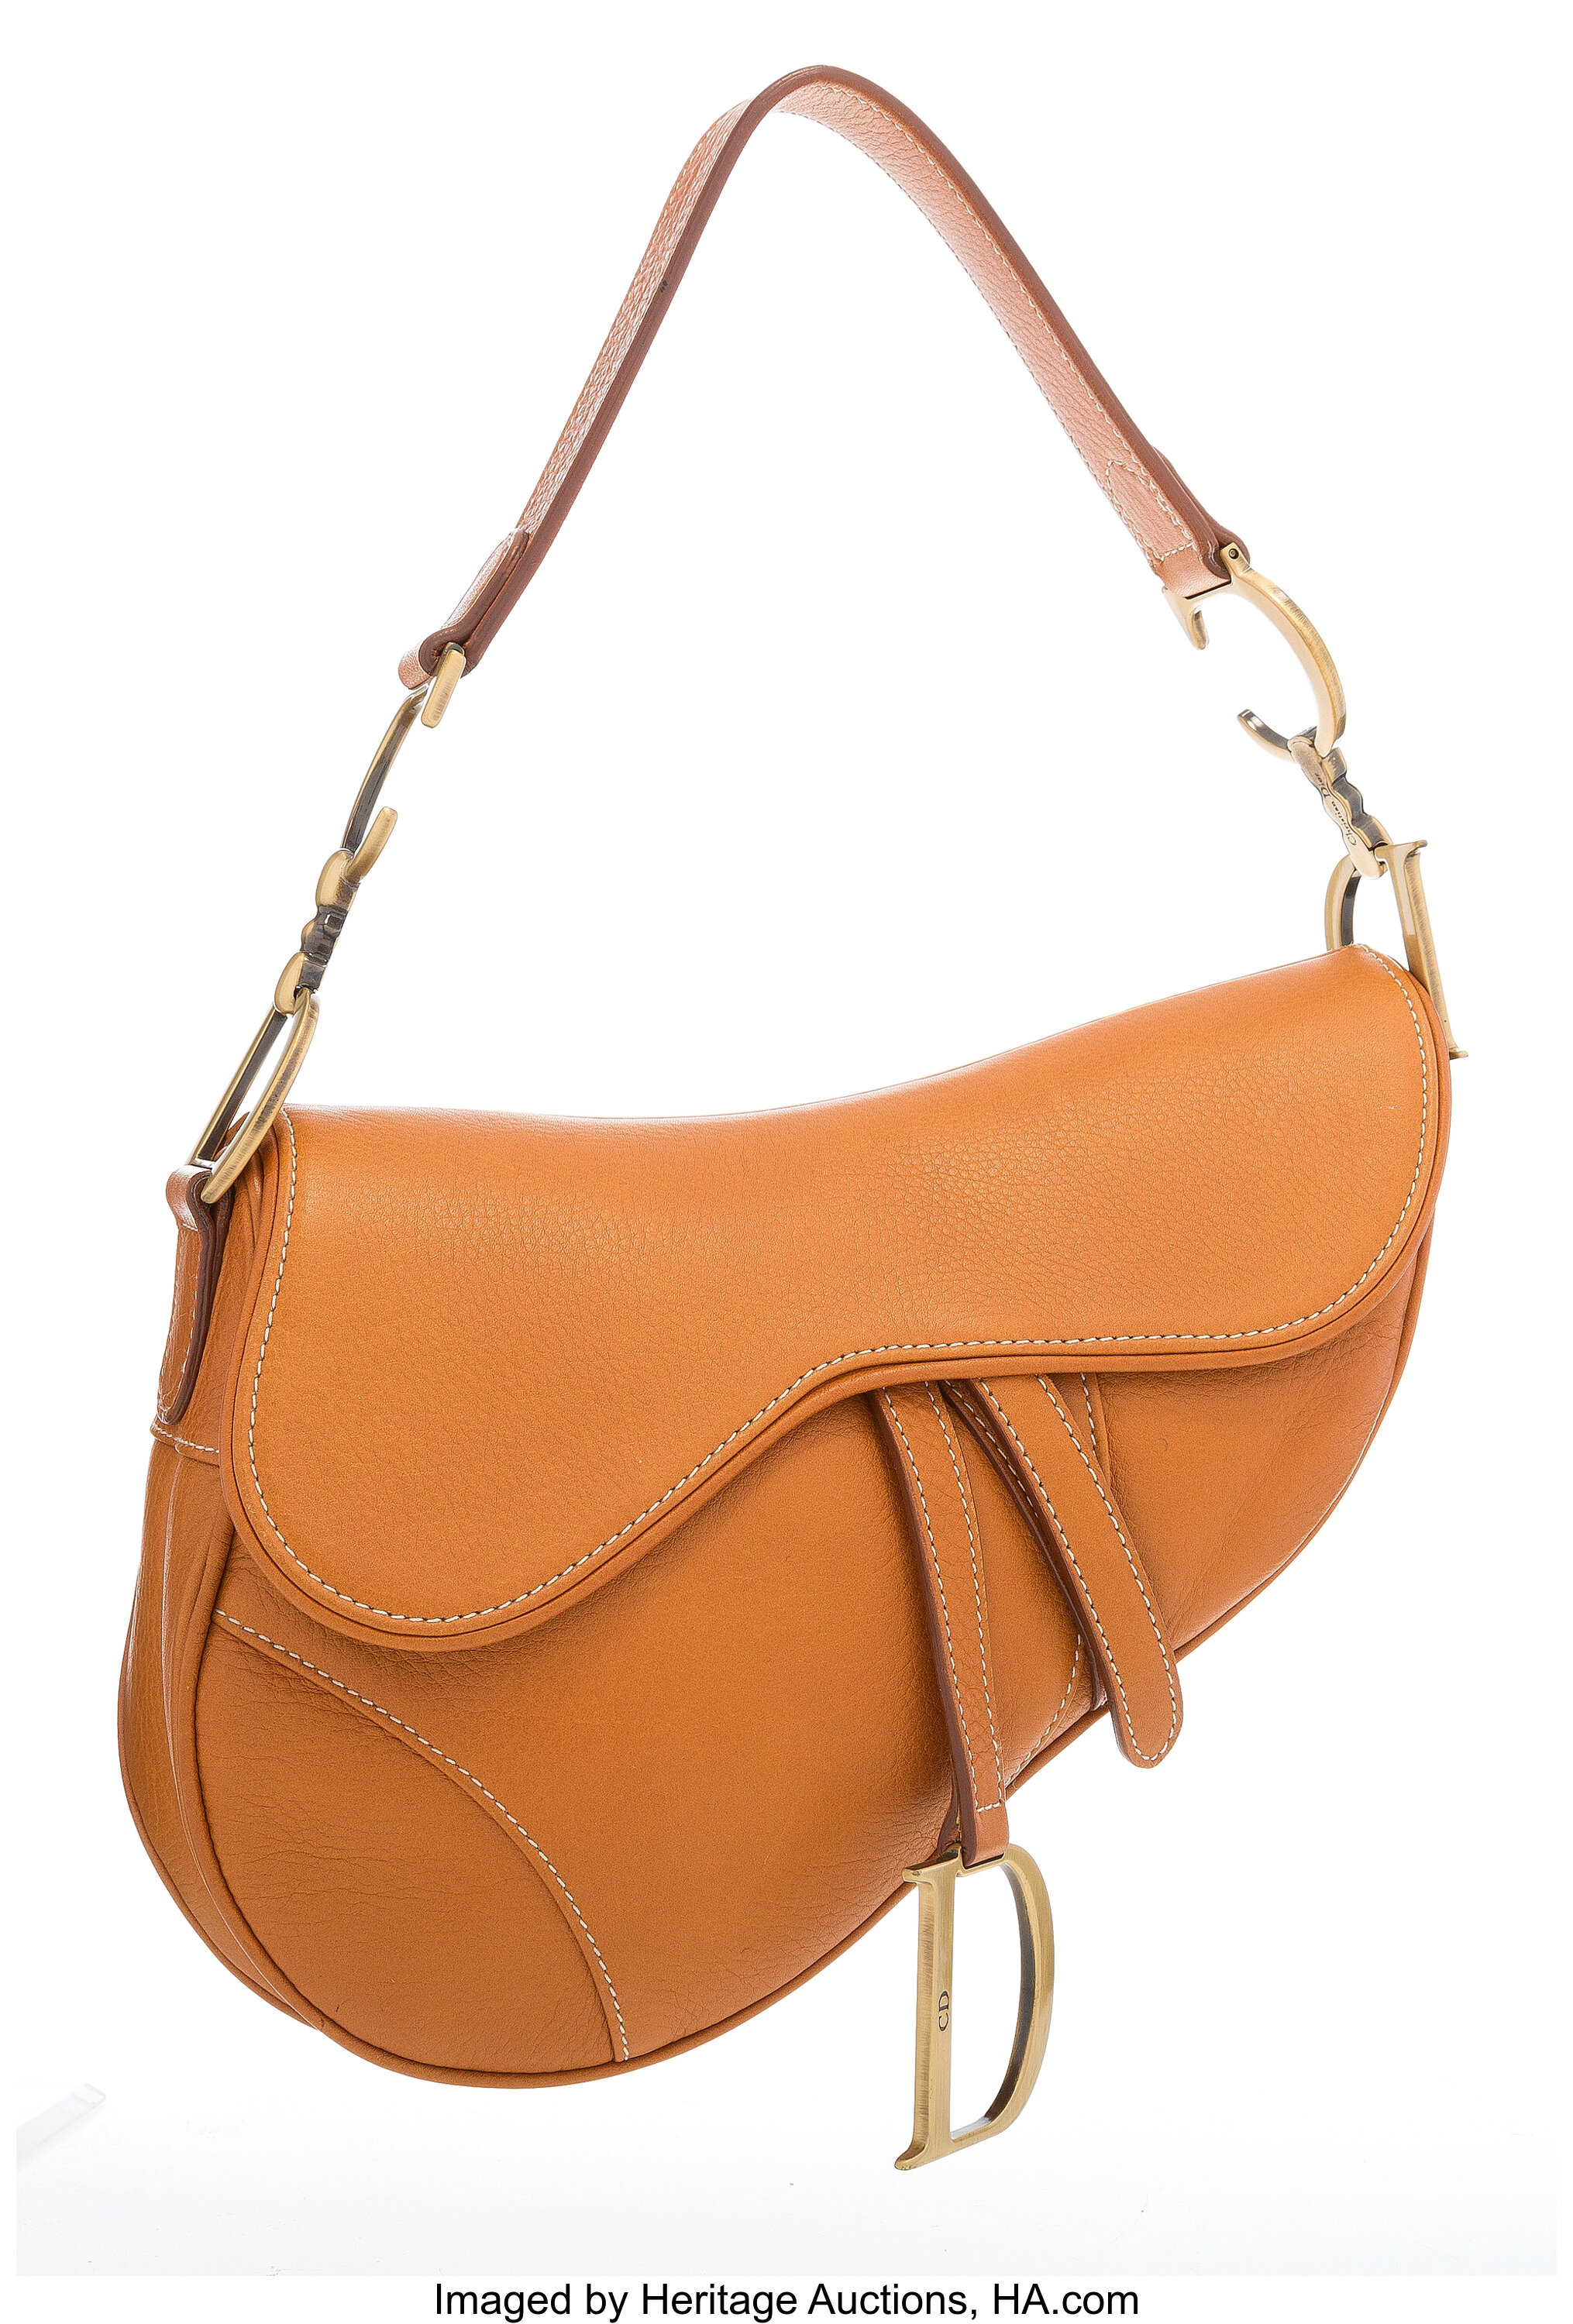 Dior Christian Dior Brown Leather Saddle Pochette Waist Bag